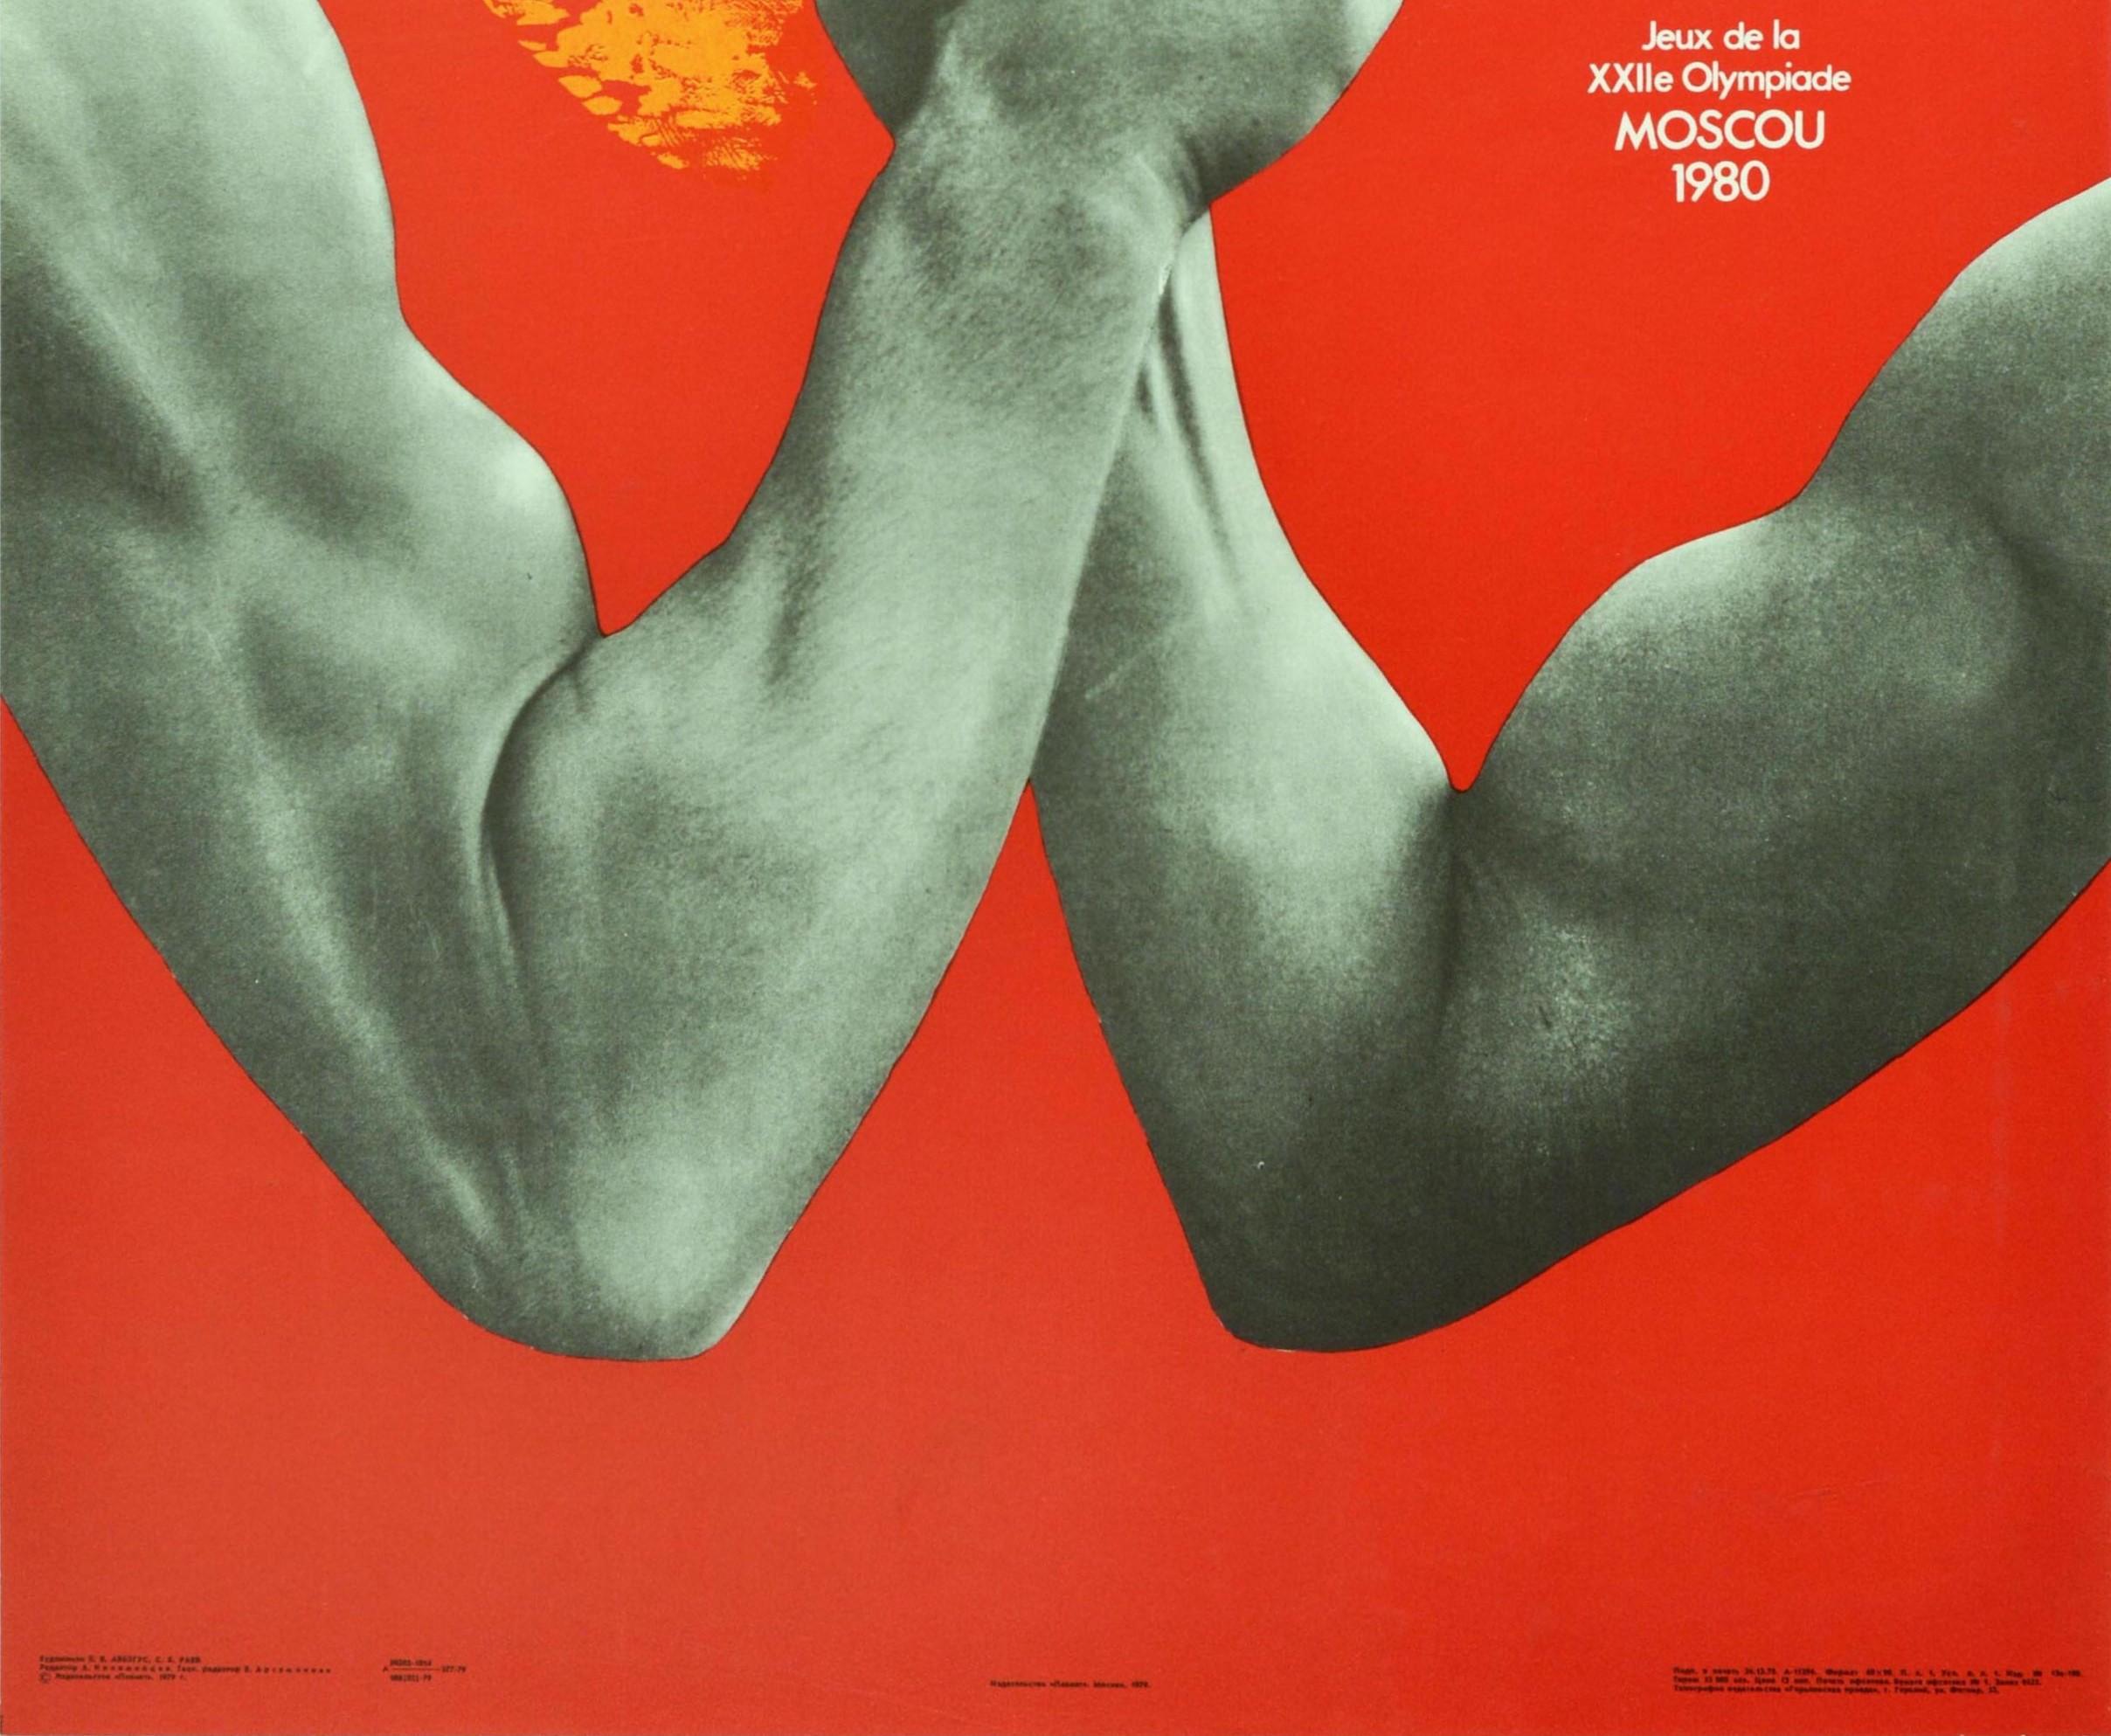 arm wrestling poster